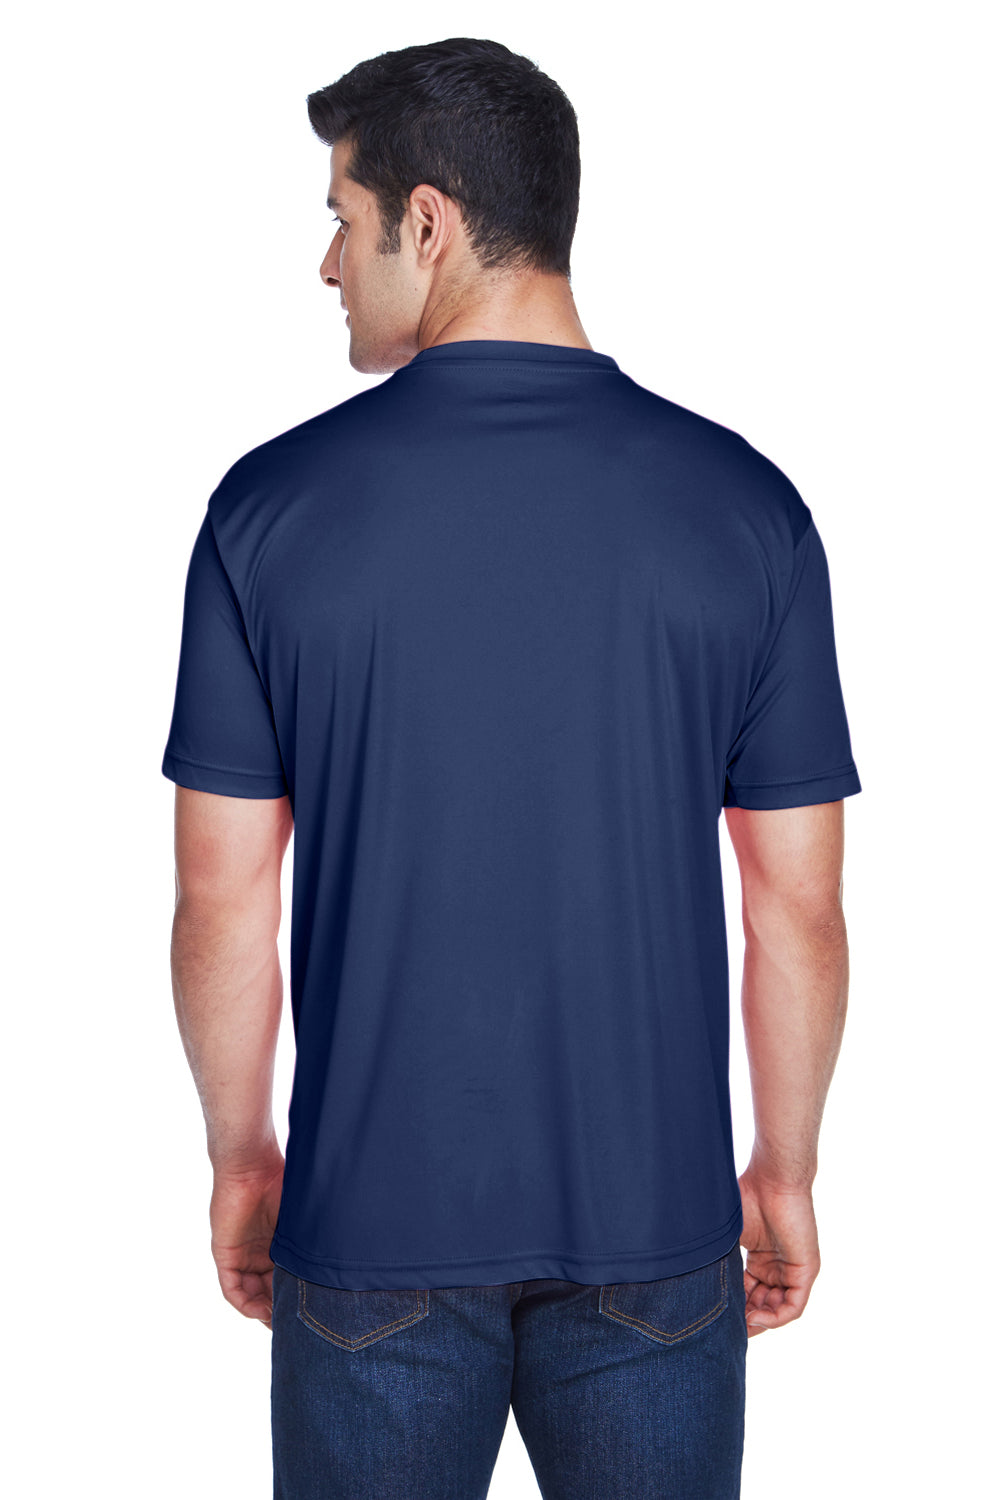 UltraClub 8420 Mens Cool & Dry Performance Moisture Wicking Short Sleeve Crewneck T-Shirt Navy Blue Back